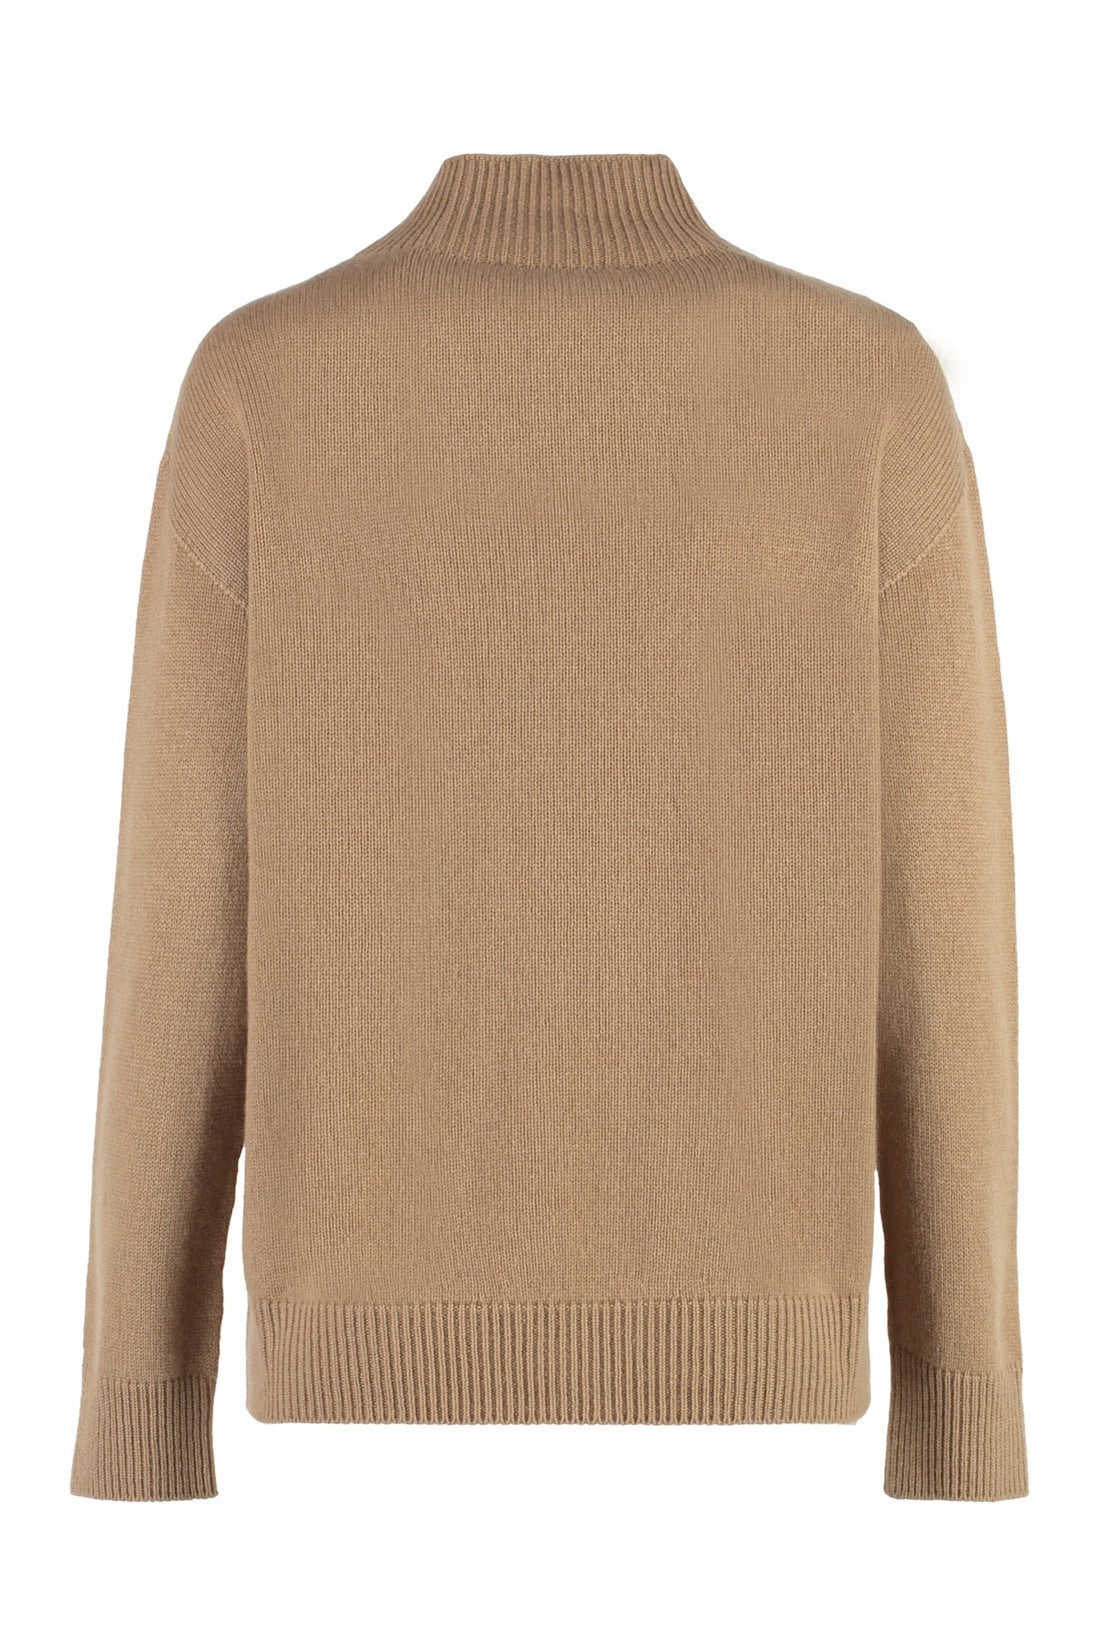 S MAX MARA-OUTLET-SALE-Cashmere turtleneck sweater-ARCHIVIST